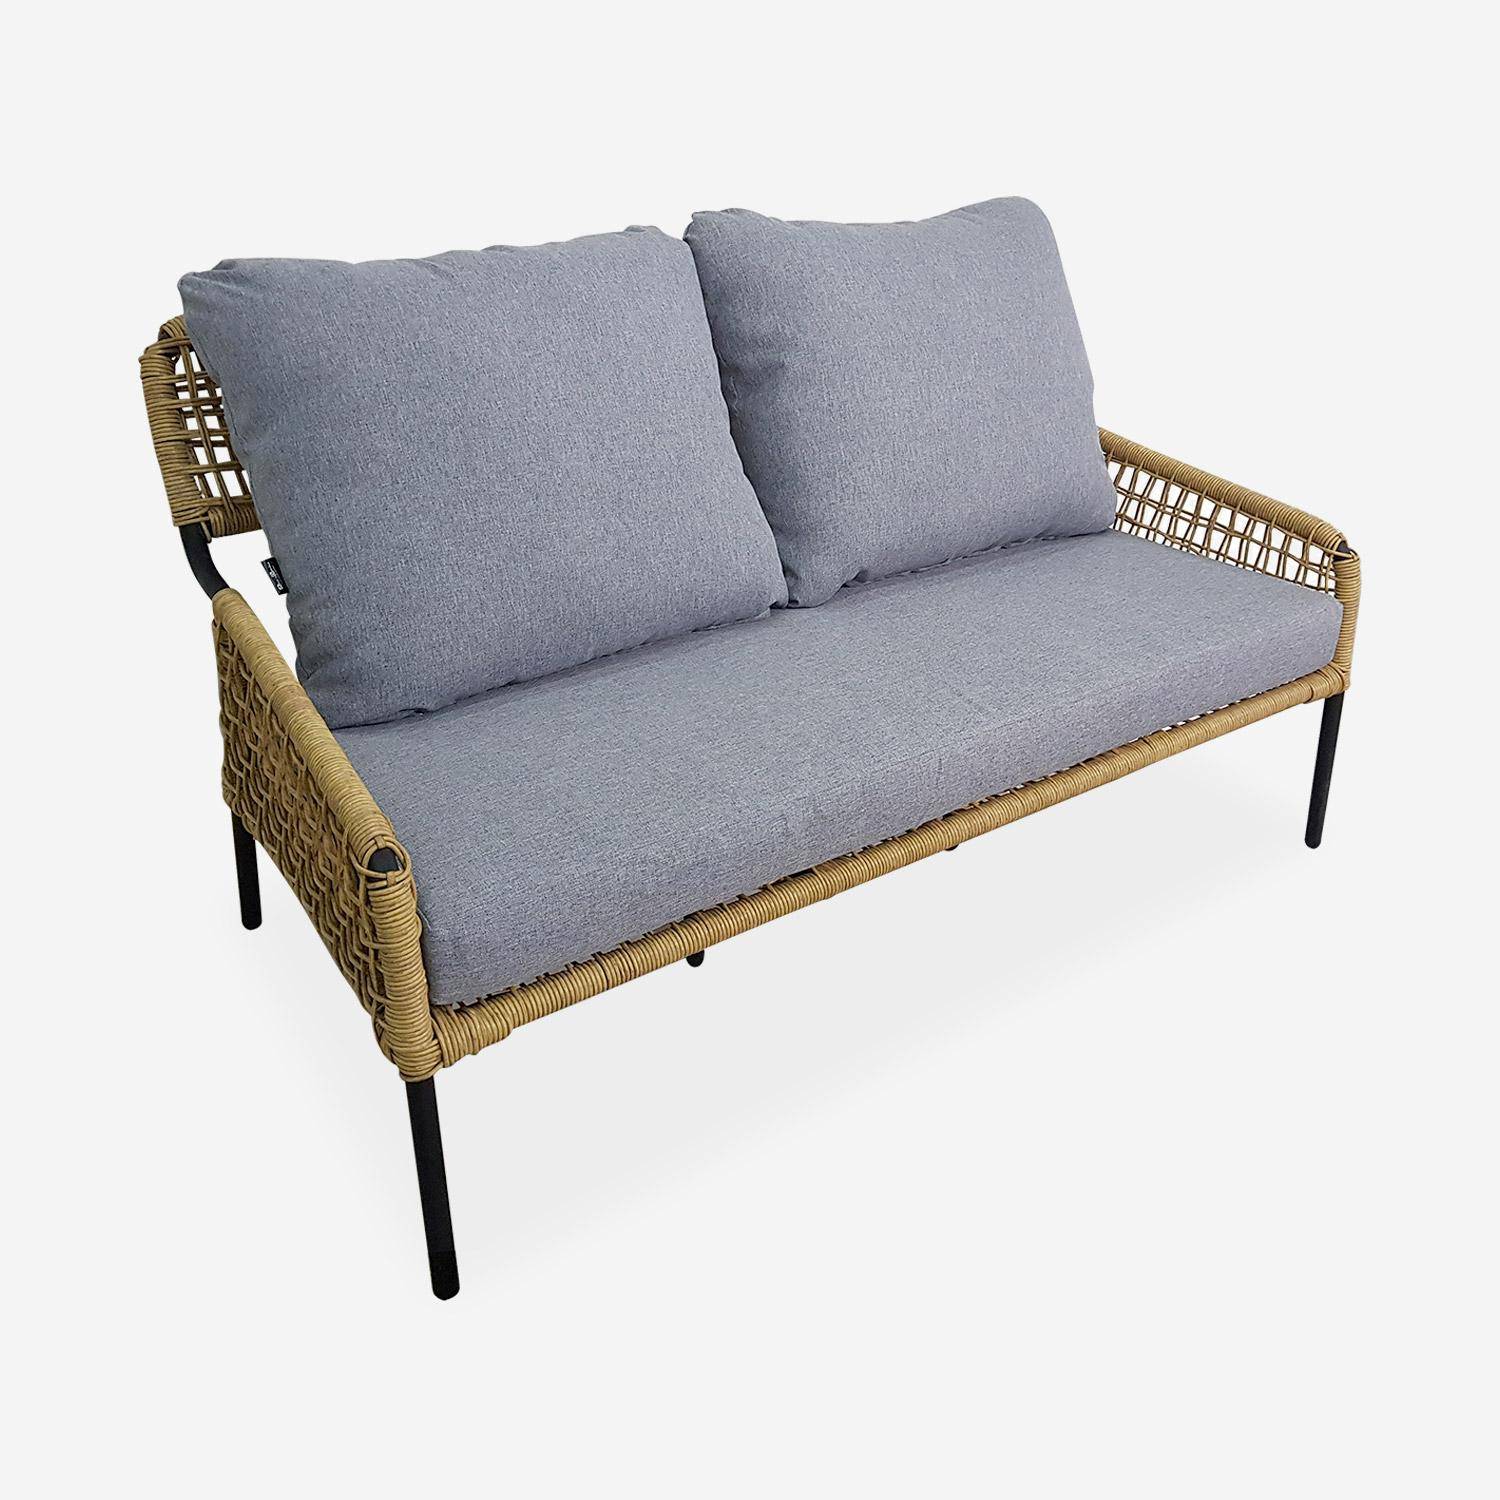 4-seater bamboo-effect rattan garden sofa set - Komodo - Natural, Grey Photo2